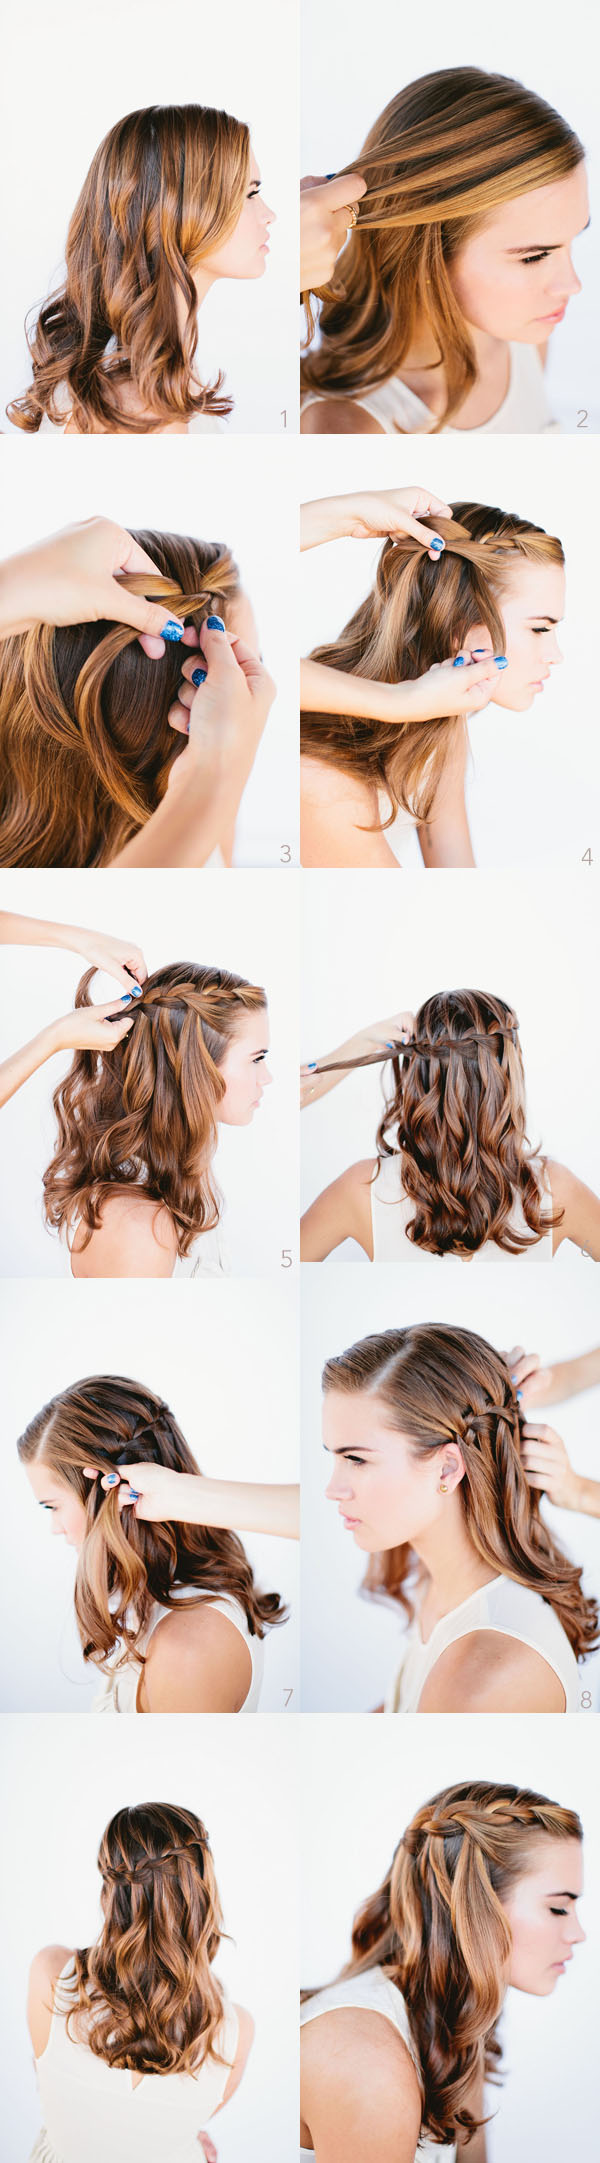 waterfall-braid-wedding-hairstyles-for-long-hair2